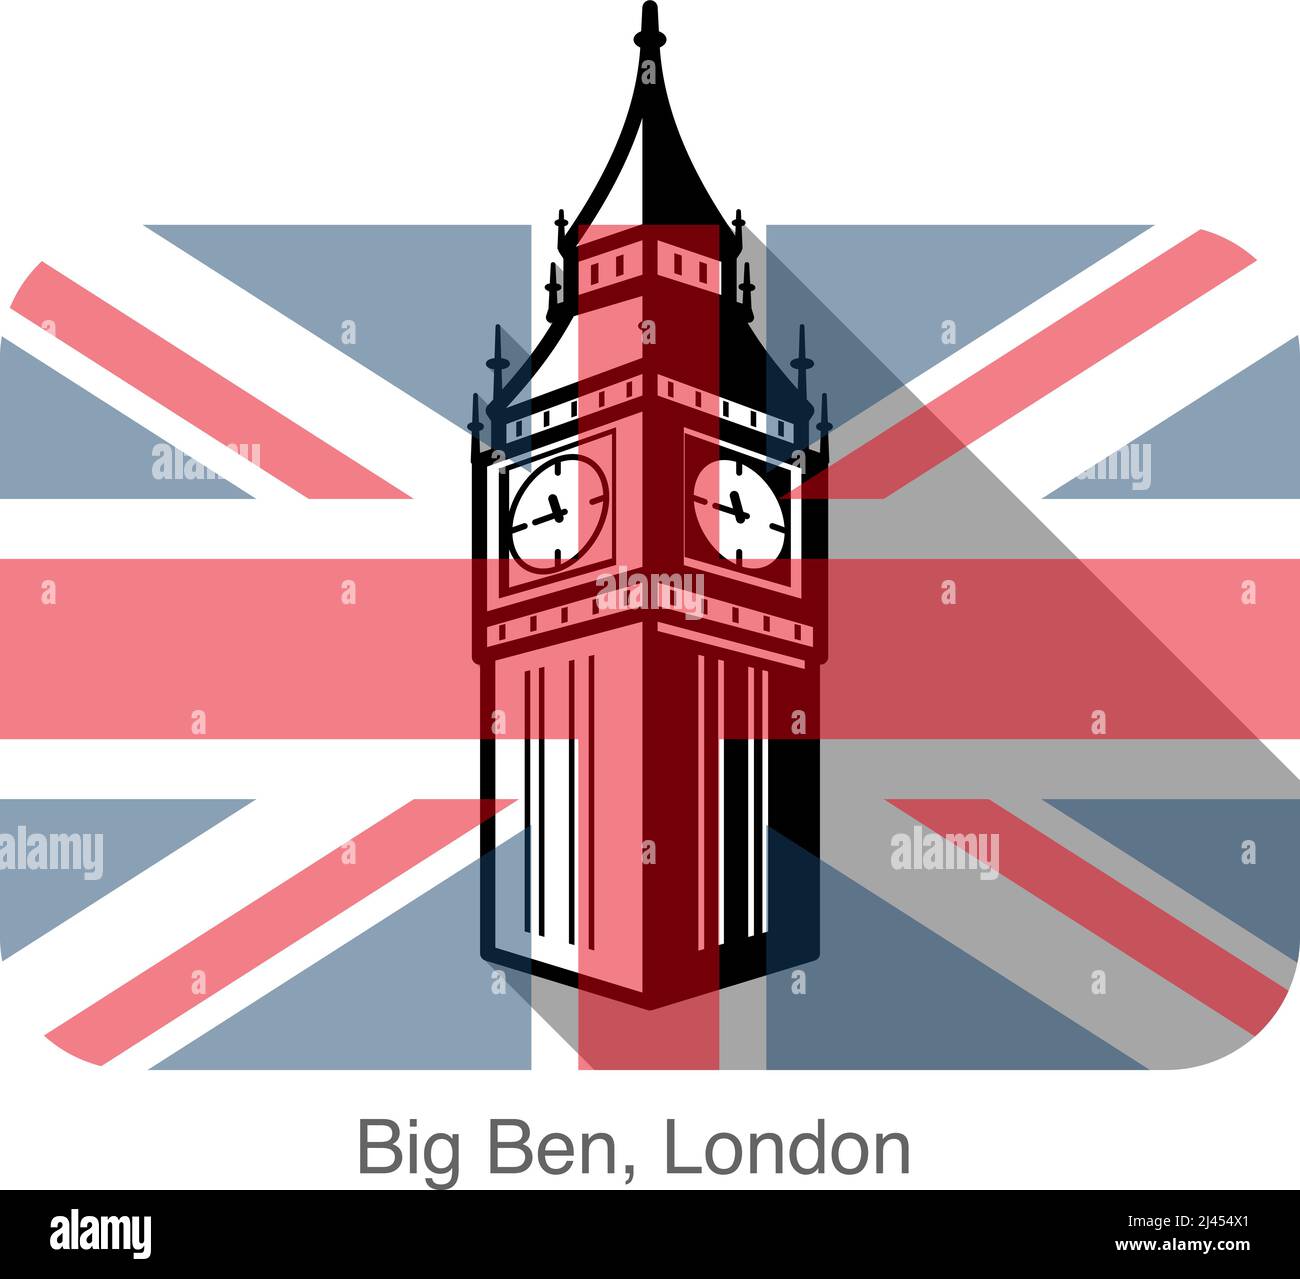 Big Ben, London, landmark flat icon design, background is British flag Stock Vector